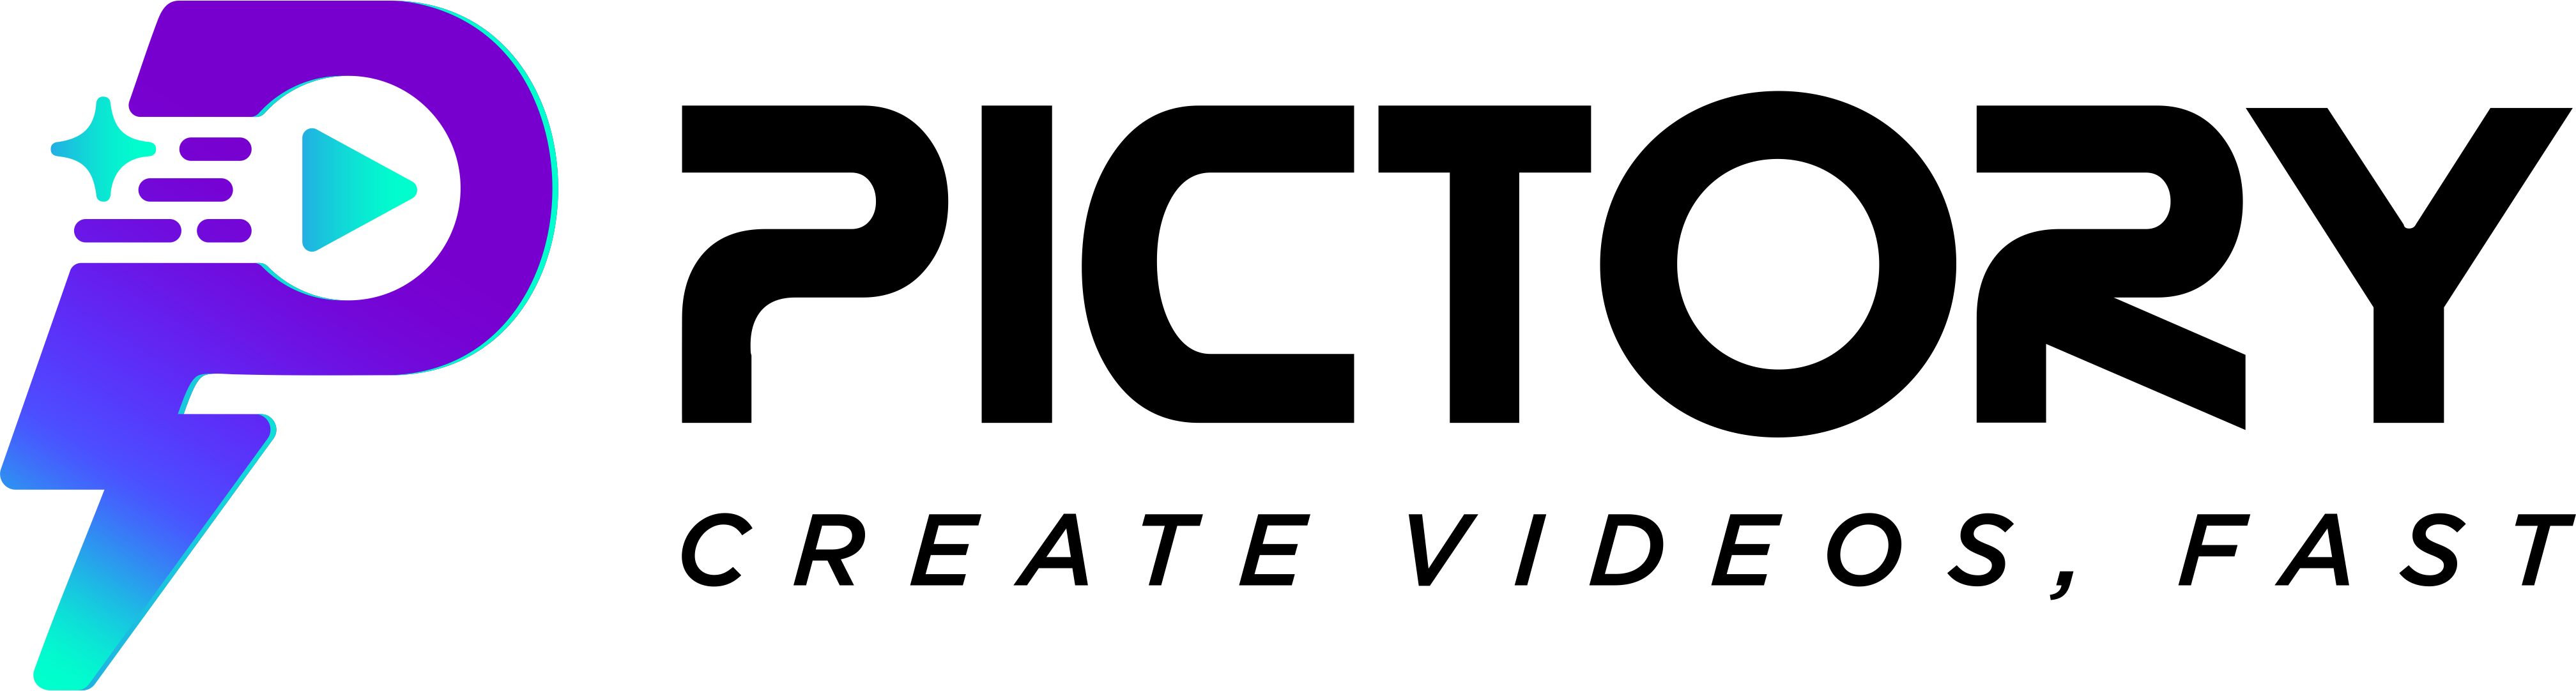 pictory logo